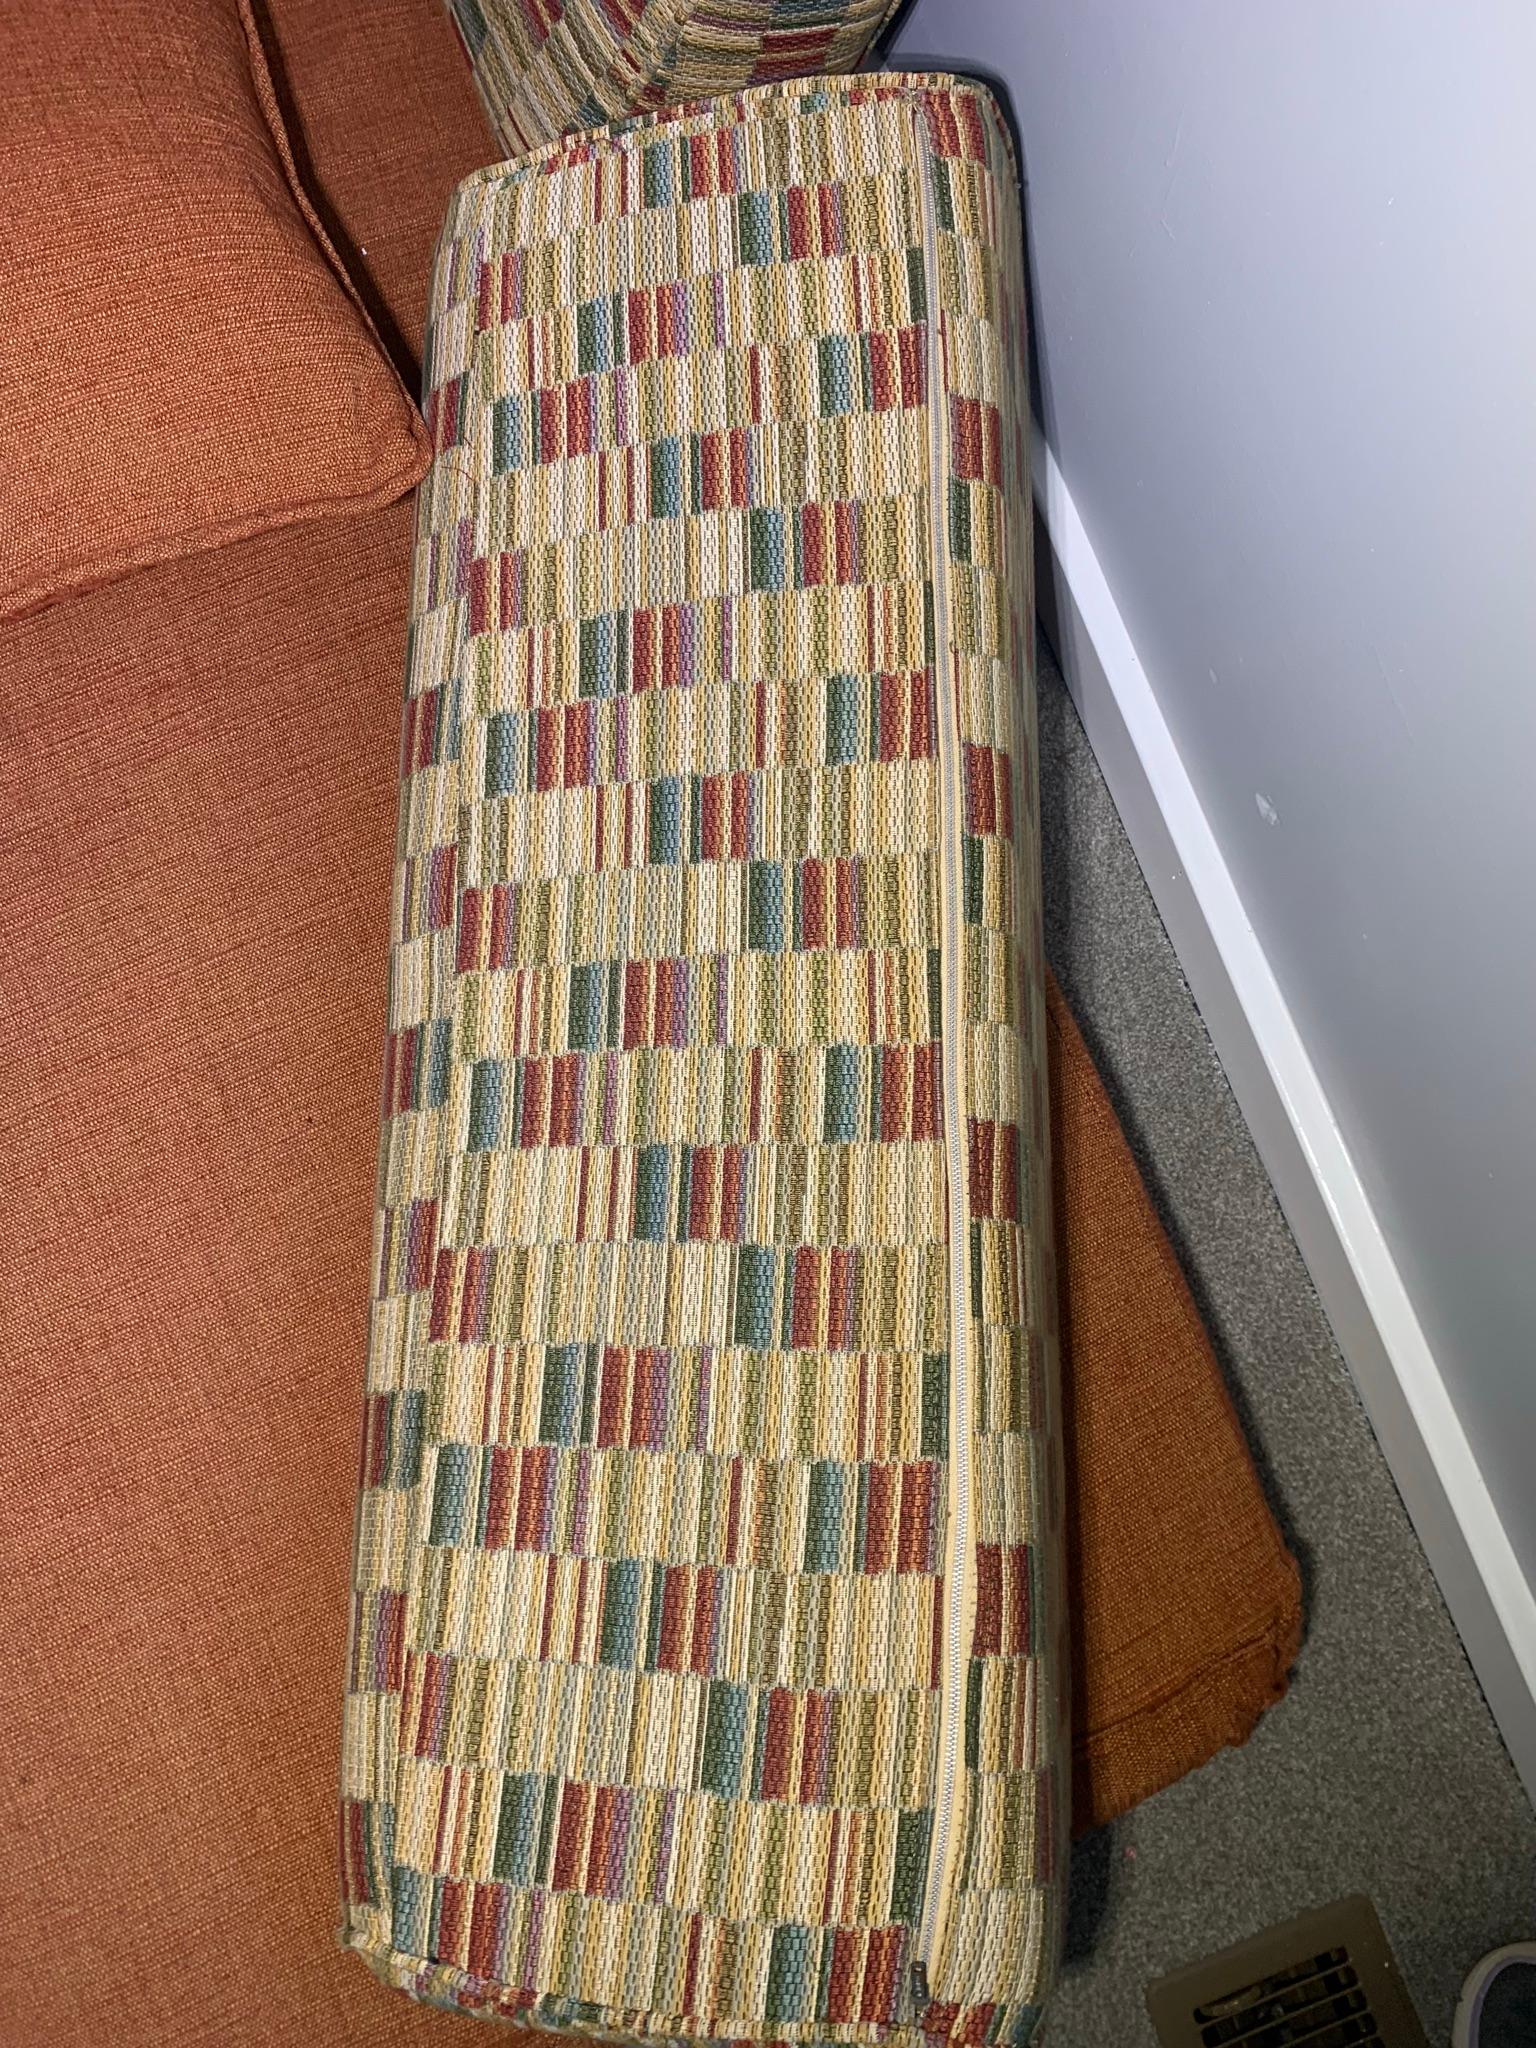 Danish Modern Cushion with Wedge Pillows